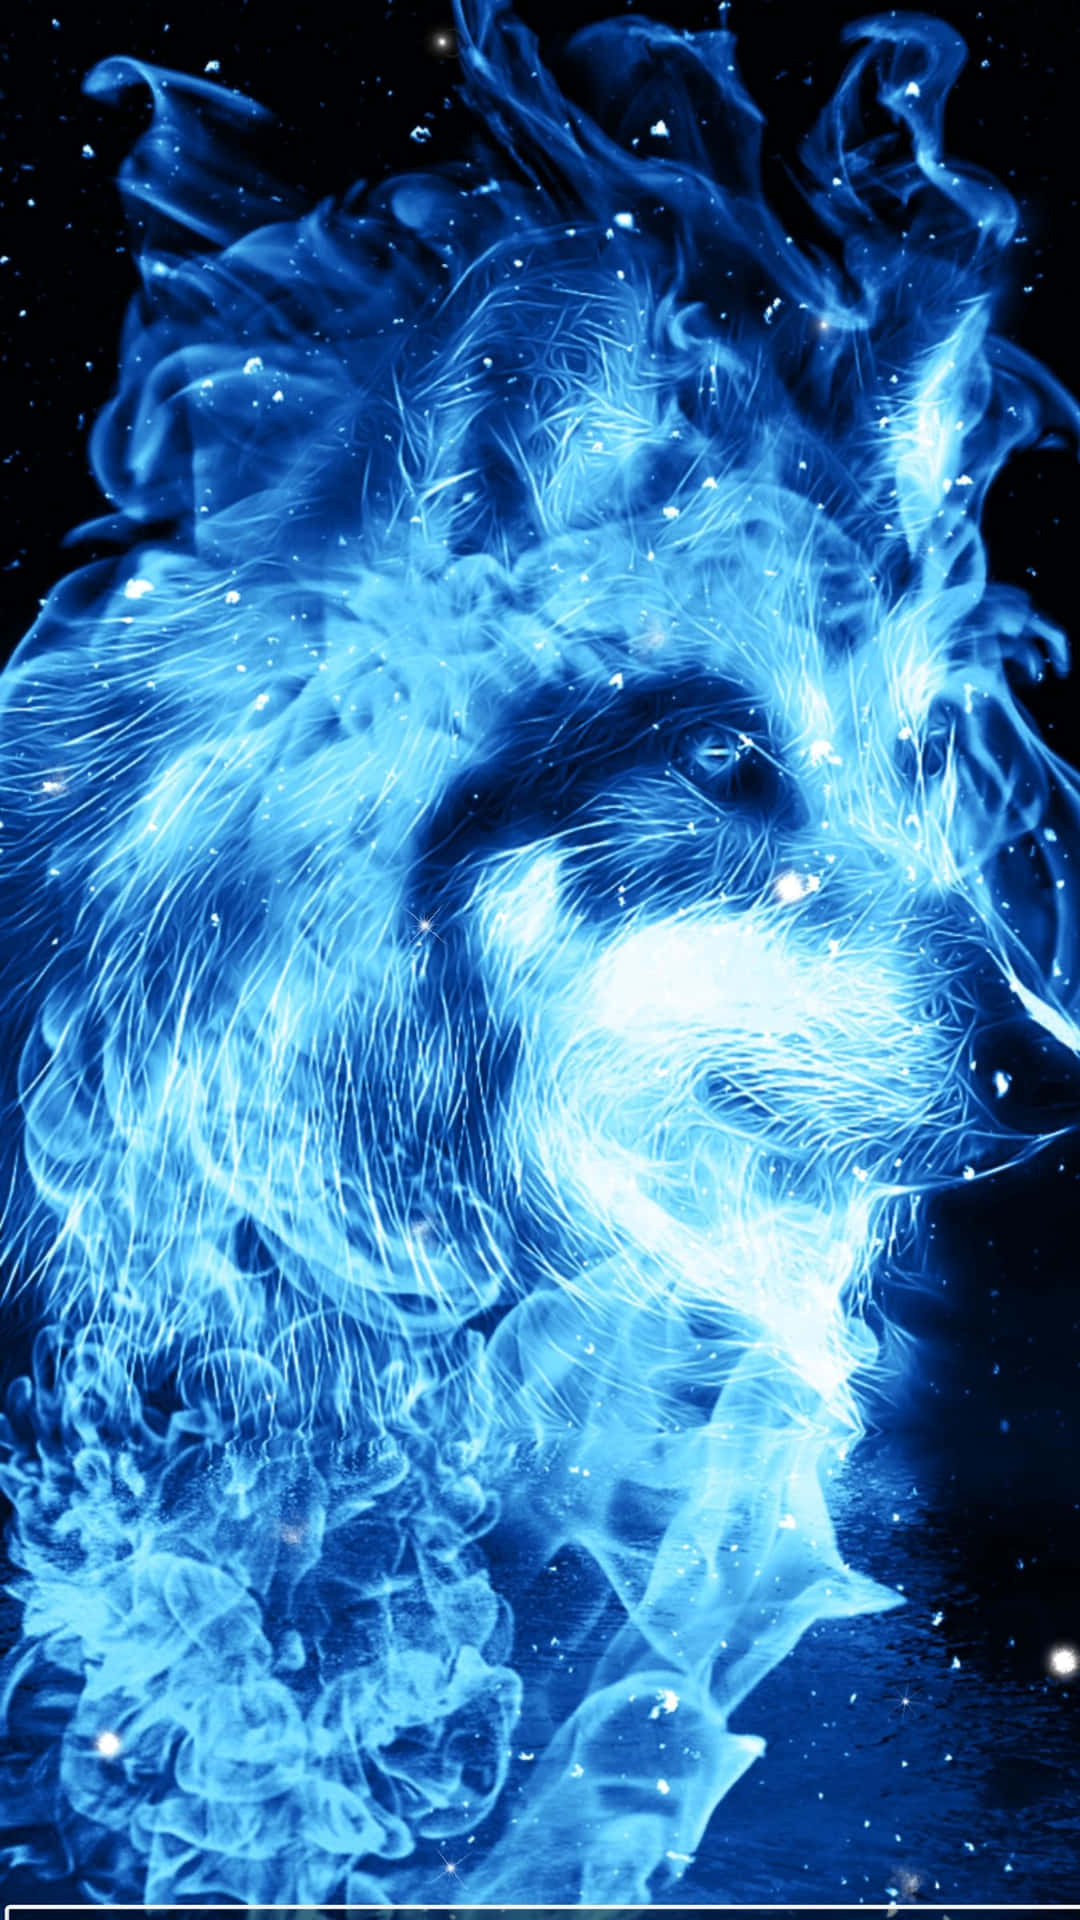 A Fire Wolf Roaming Through Water Reflections Wallpaper